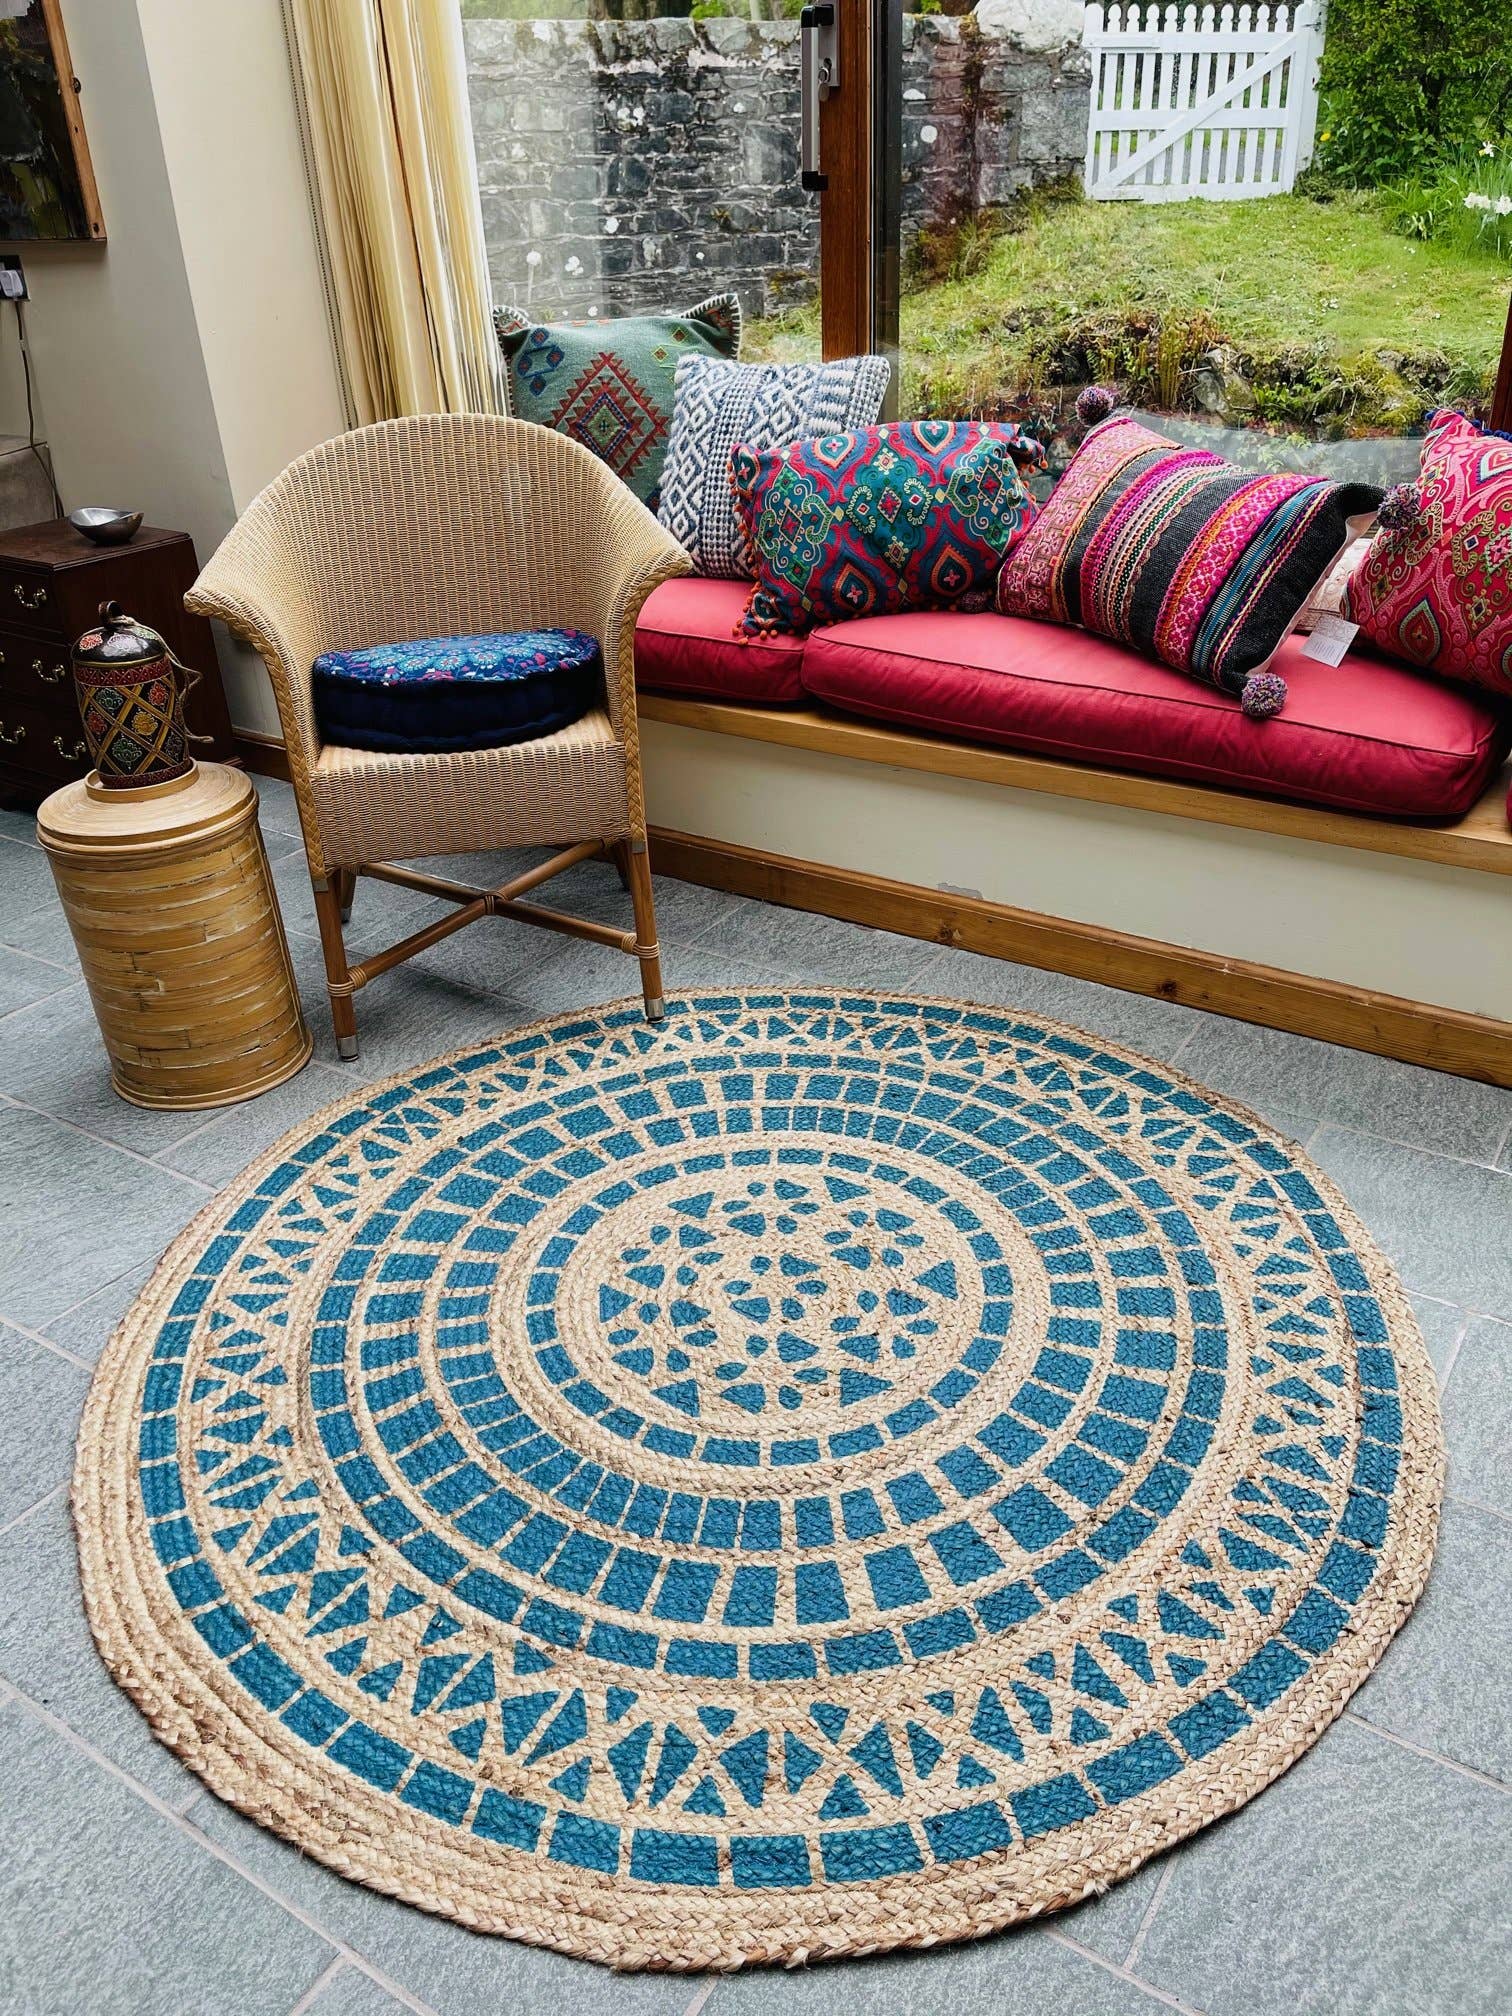 Mandala Round Braided Jute Rug with Blockprint Indian White Design Large 